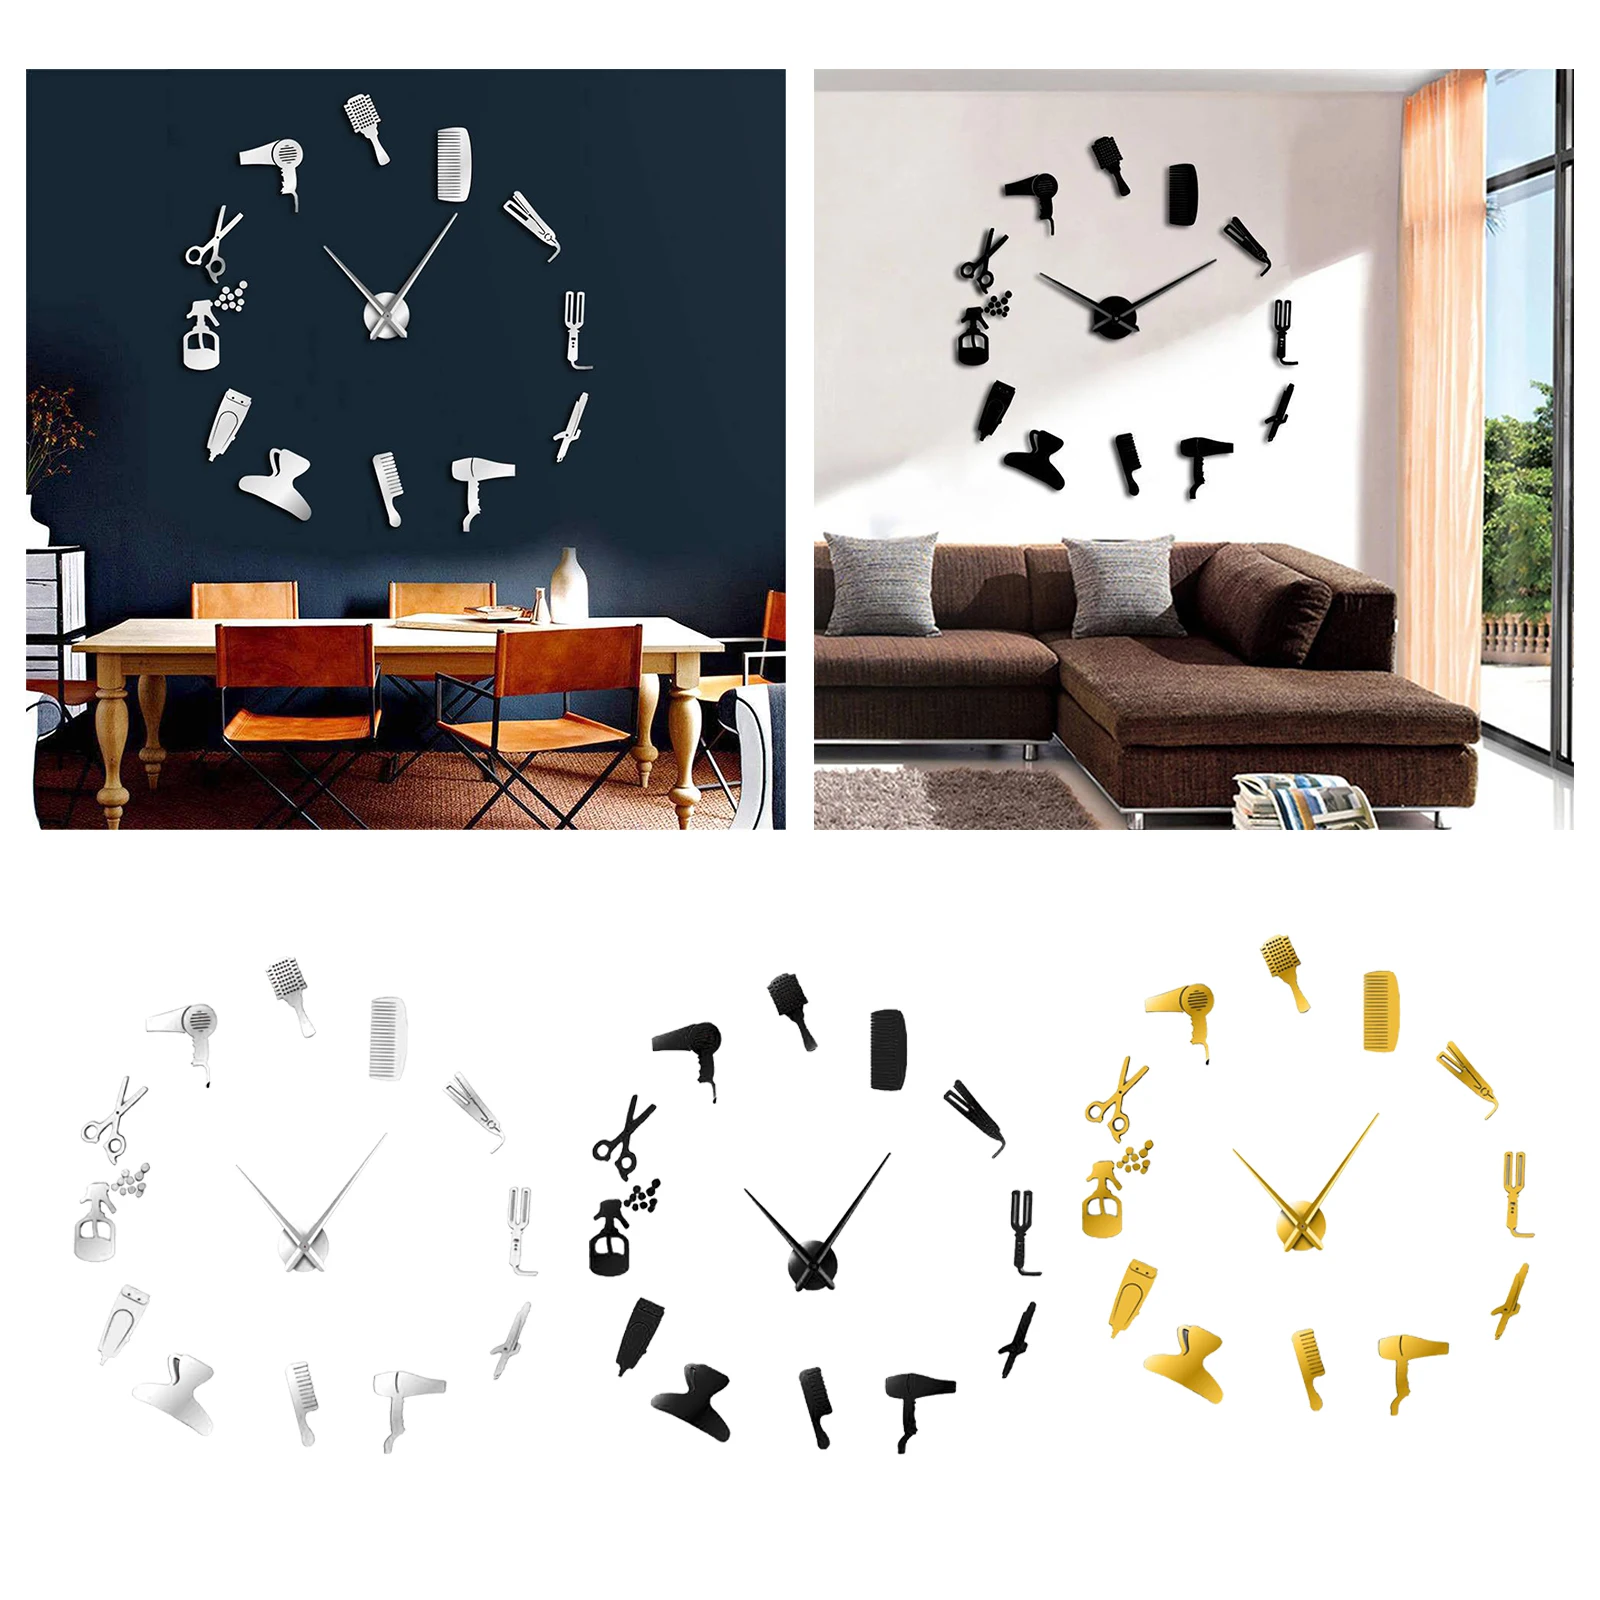 3D DIY Wall Clock Decor Sticker Mirror Frameless Large DIY Wall Clock Kit for Home Living Room Bedroom Decoration